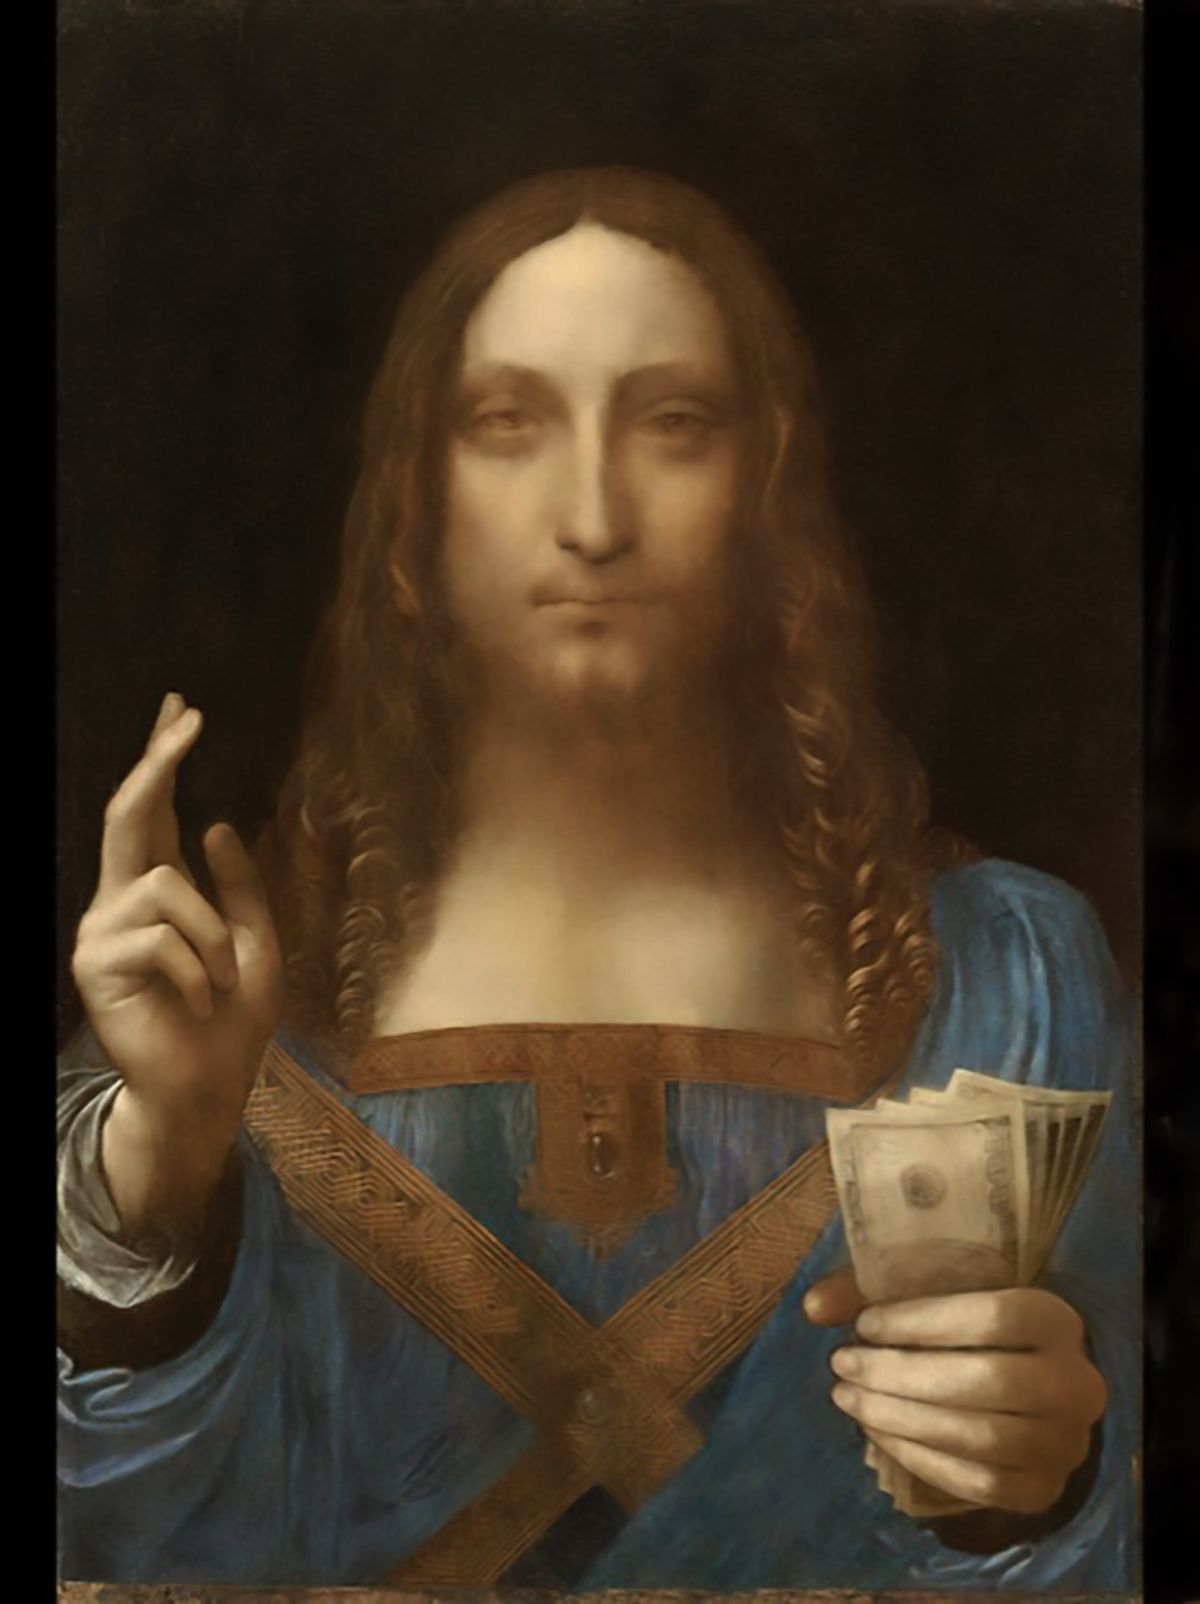 Art historian Ben Lewis has created an NFT of Salvator Mundi by Leonardo da Vinci called Salvator Metaversi Courtesy of Ben Lewis